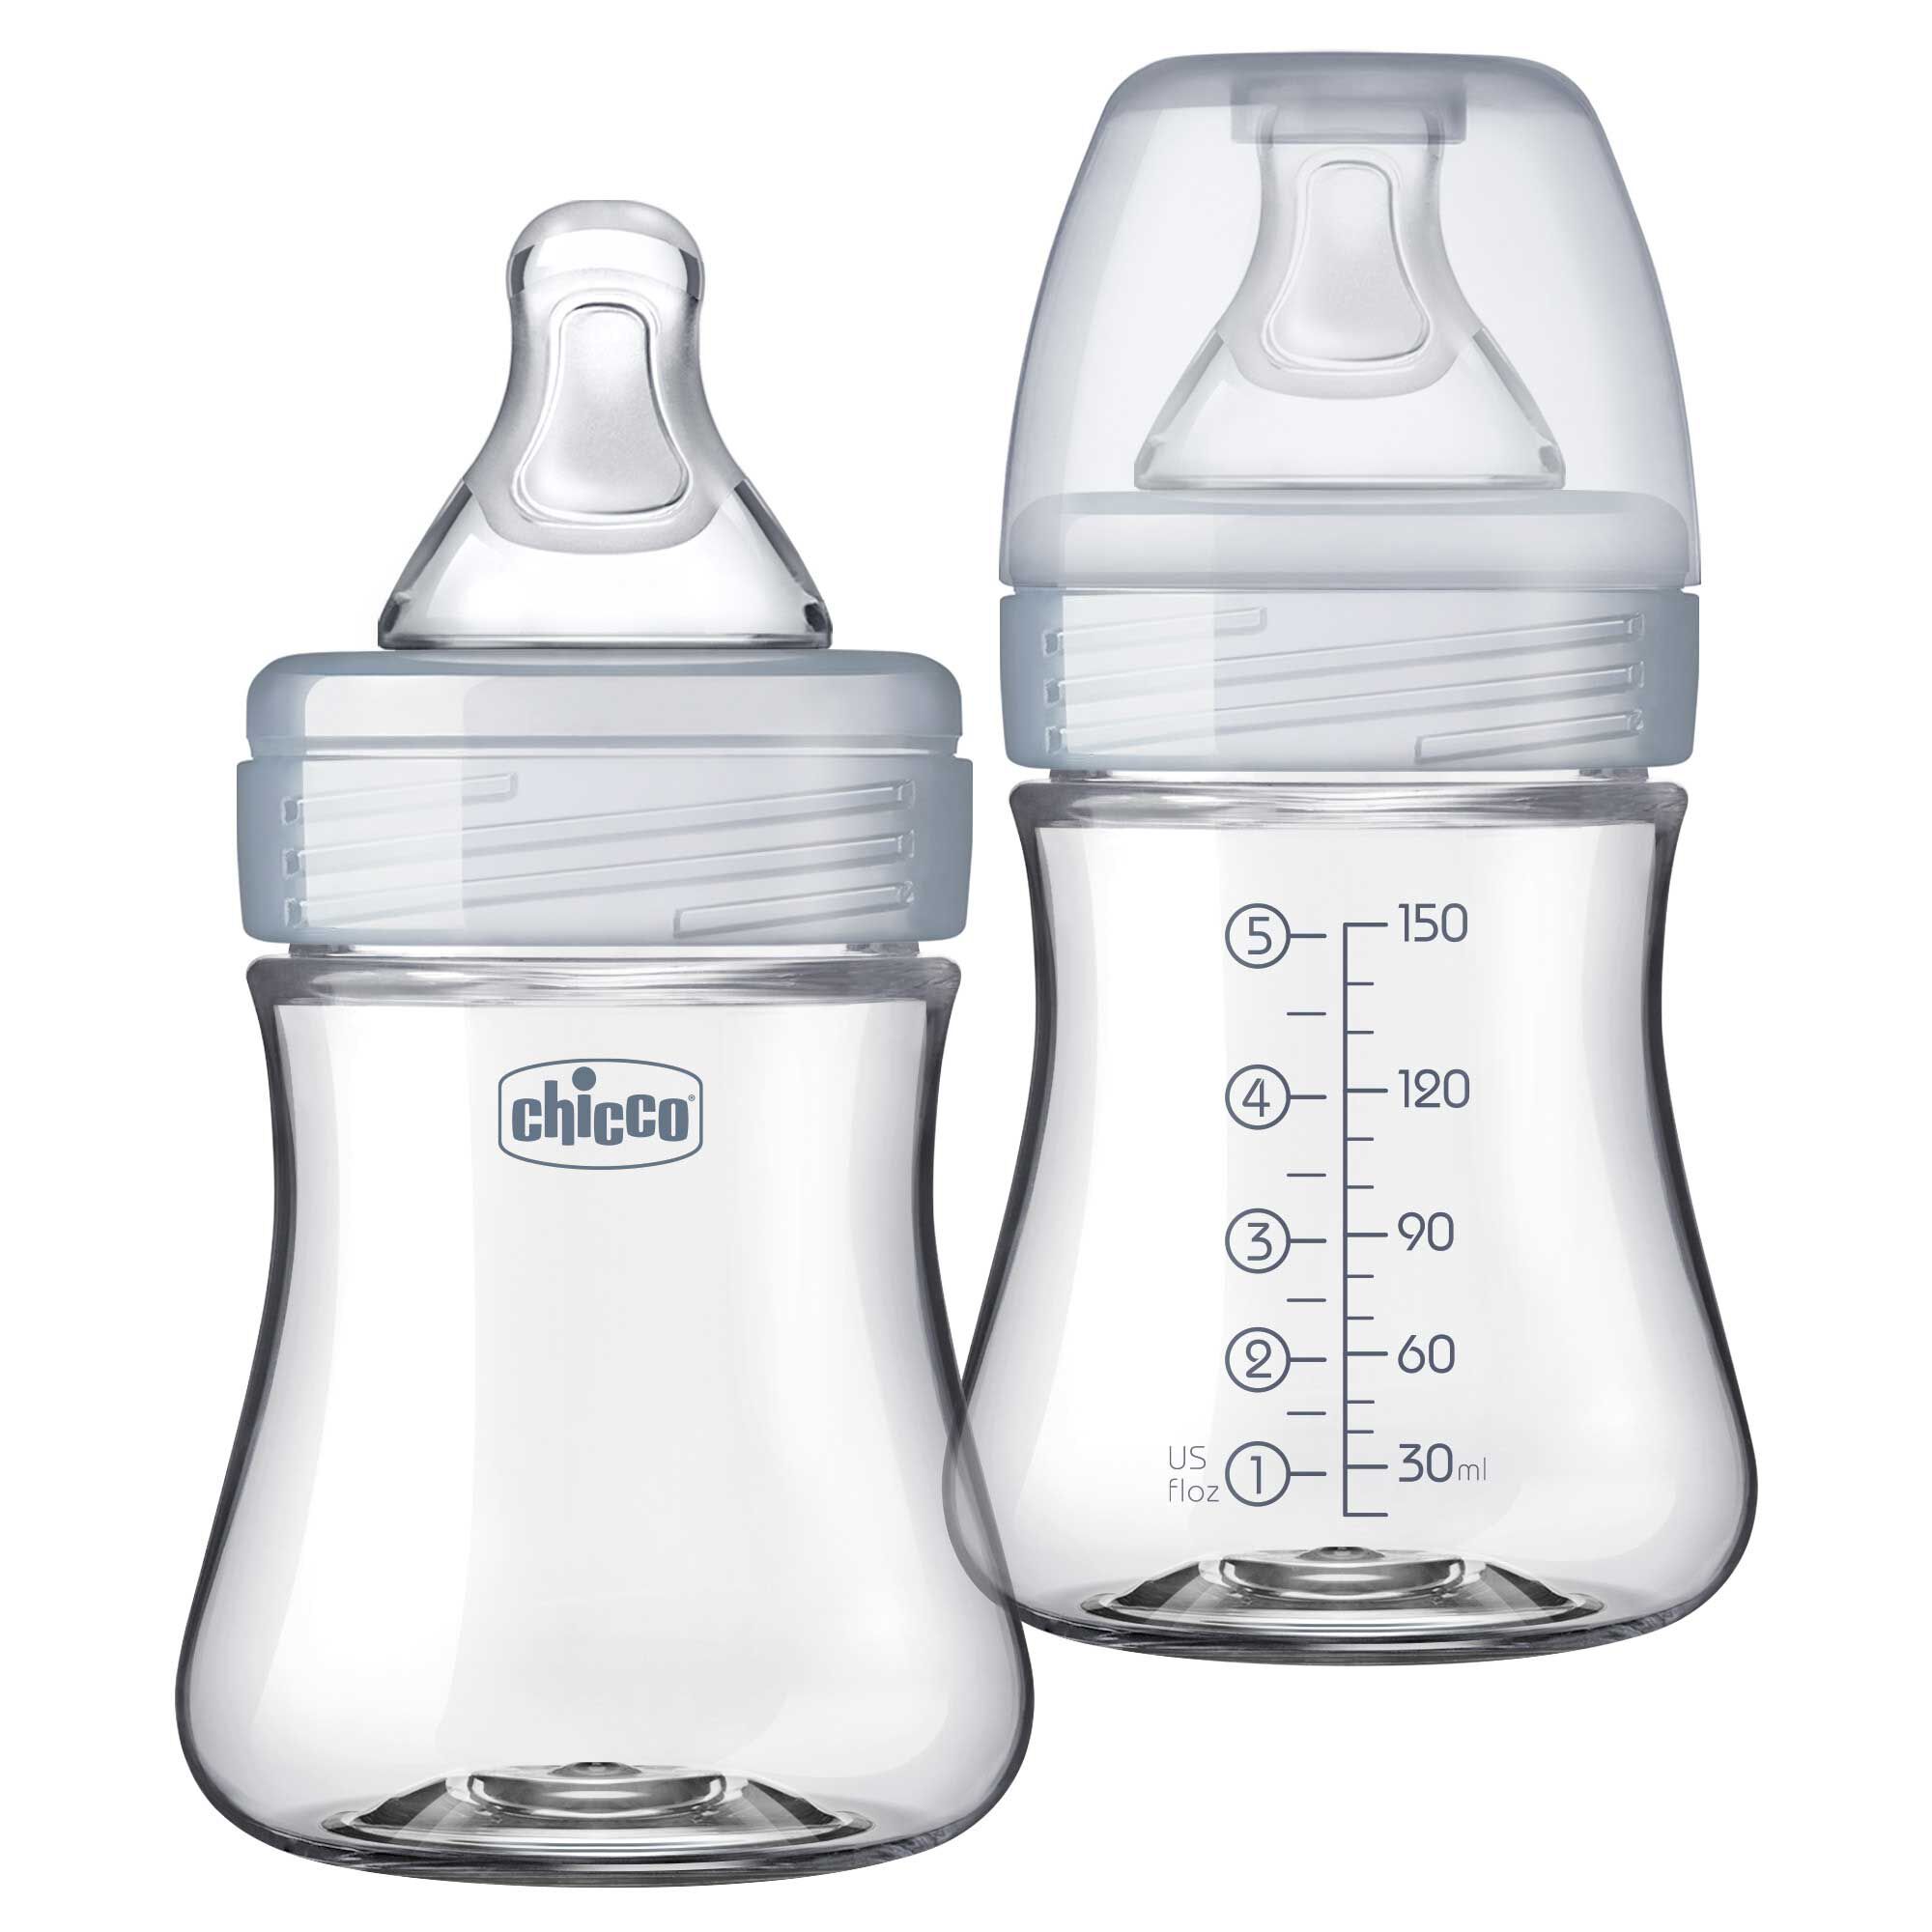 SpeCtra Baby Bottle Plastic Clear 5 oz.